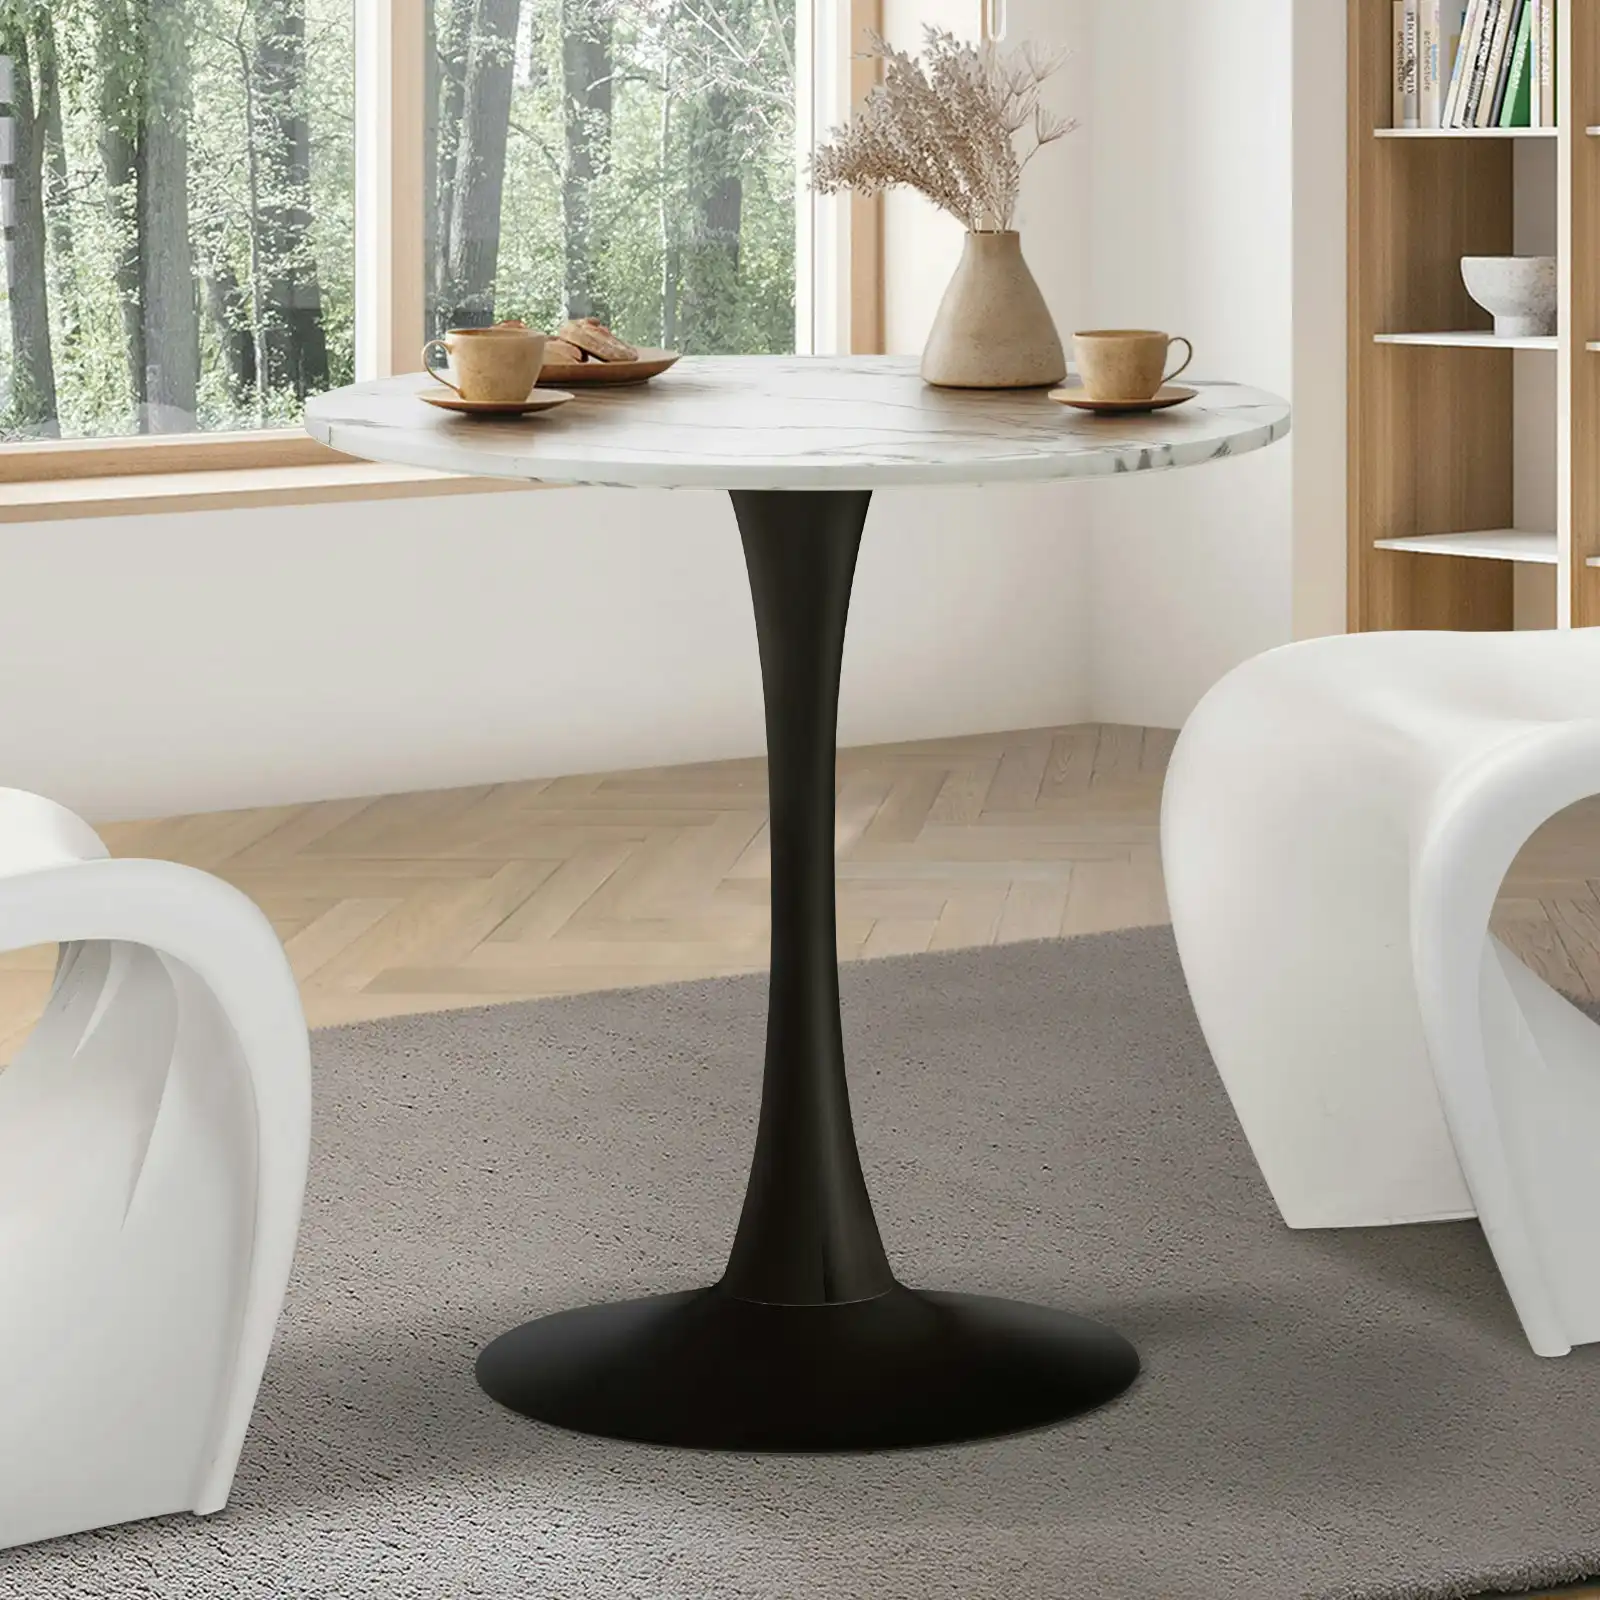 Oikiture 60cm Dining Table Kitchen Marble Tulip Round Metal Leg White&Black